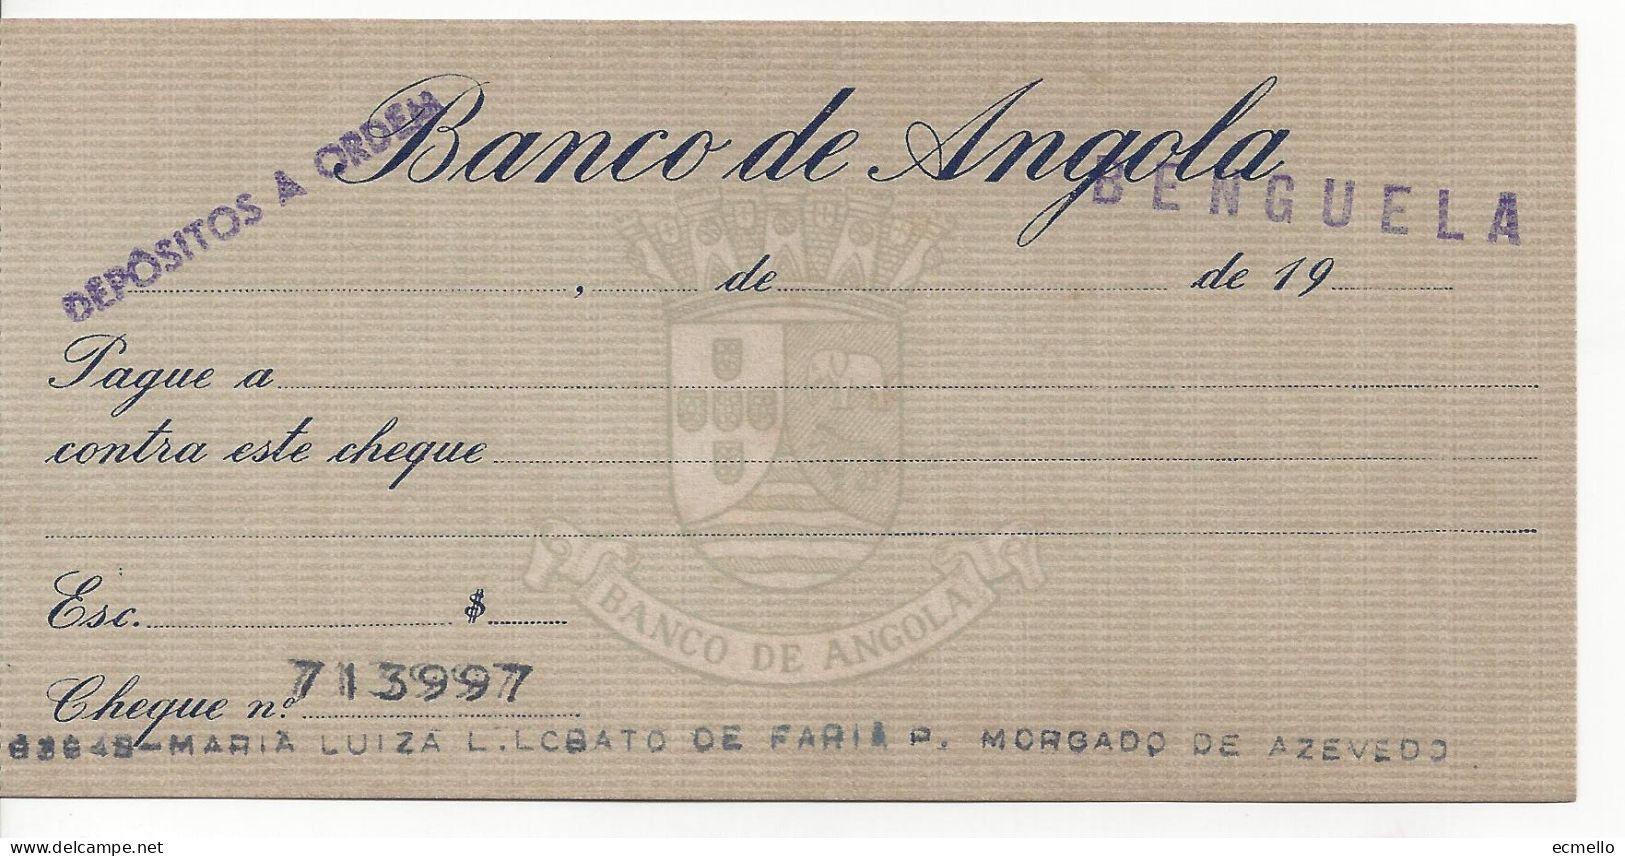 PORTUGAL ANGOLA CHEQUE CHECK BANCO DE ANGOLA, BENGUELA, 1950'S SCARCE - Cheques & Traveler's Cheques